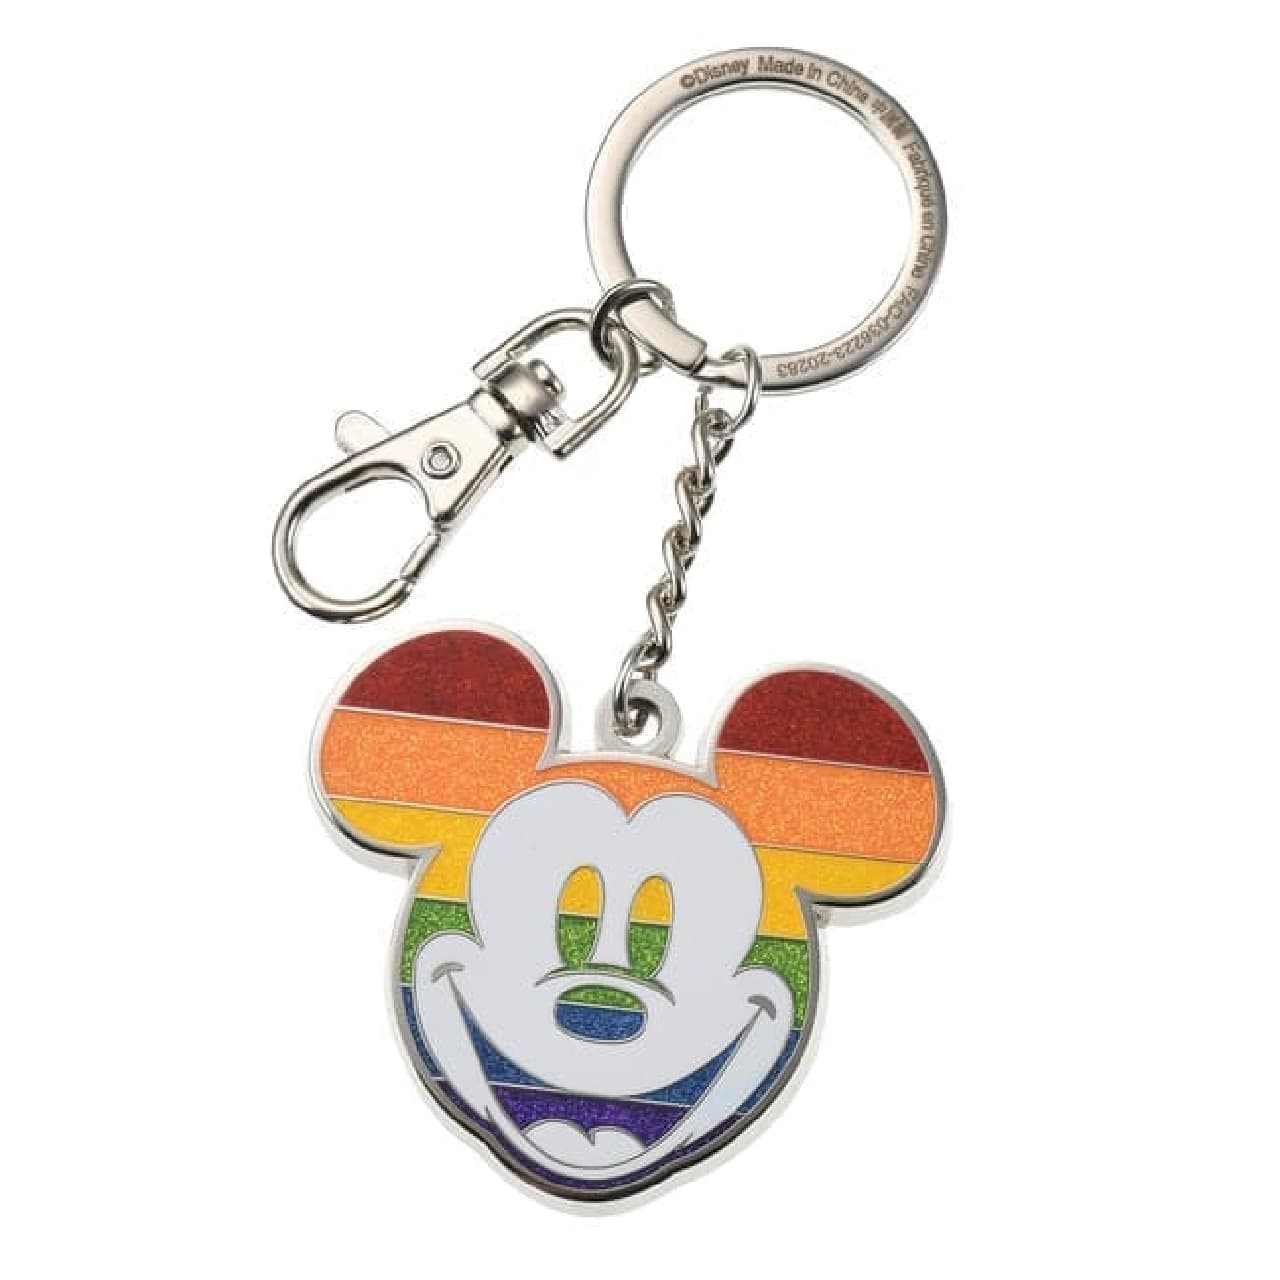 The Walt Disney Company's Pride Collection